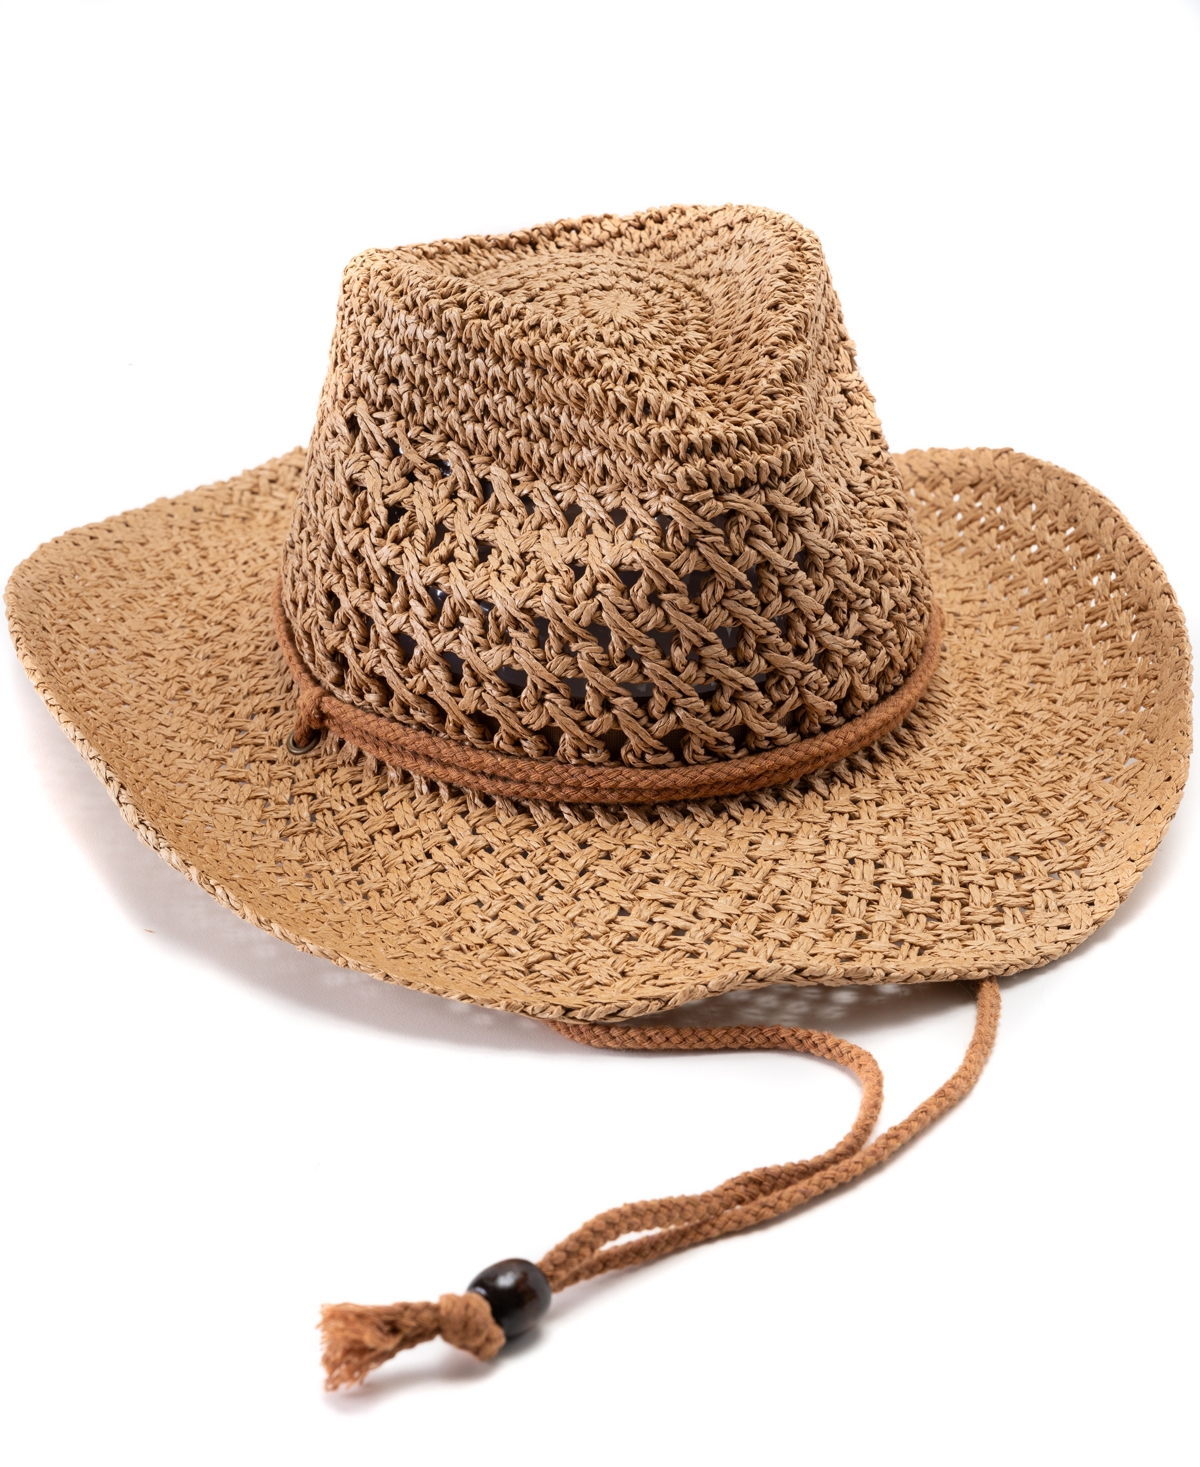 Crochet Straw Cowboy Hat with Chin Strap - Tan